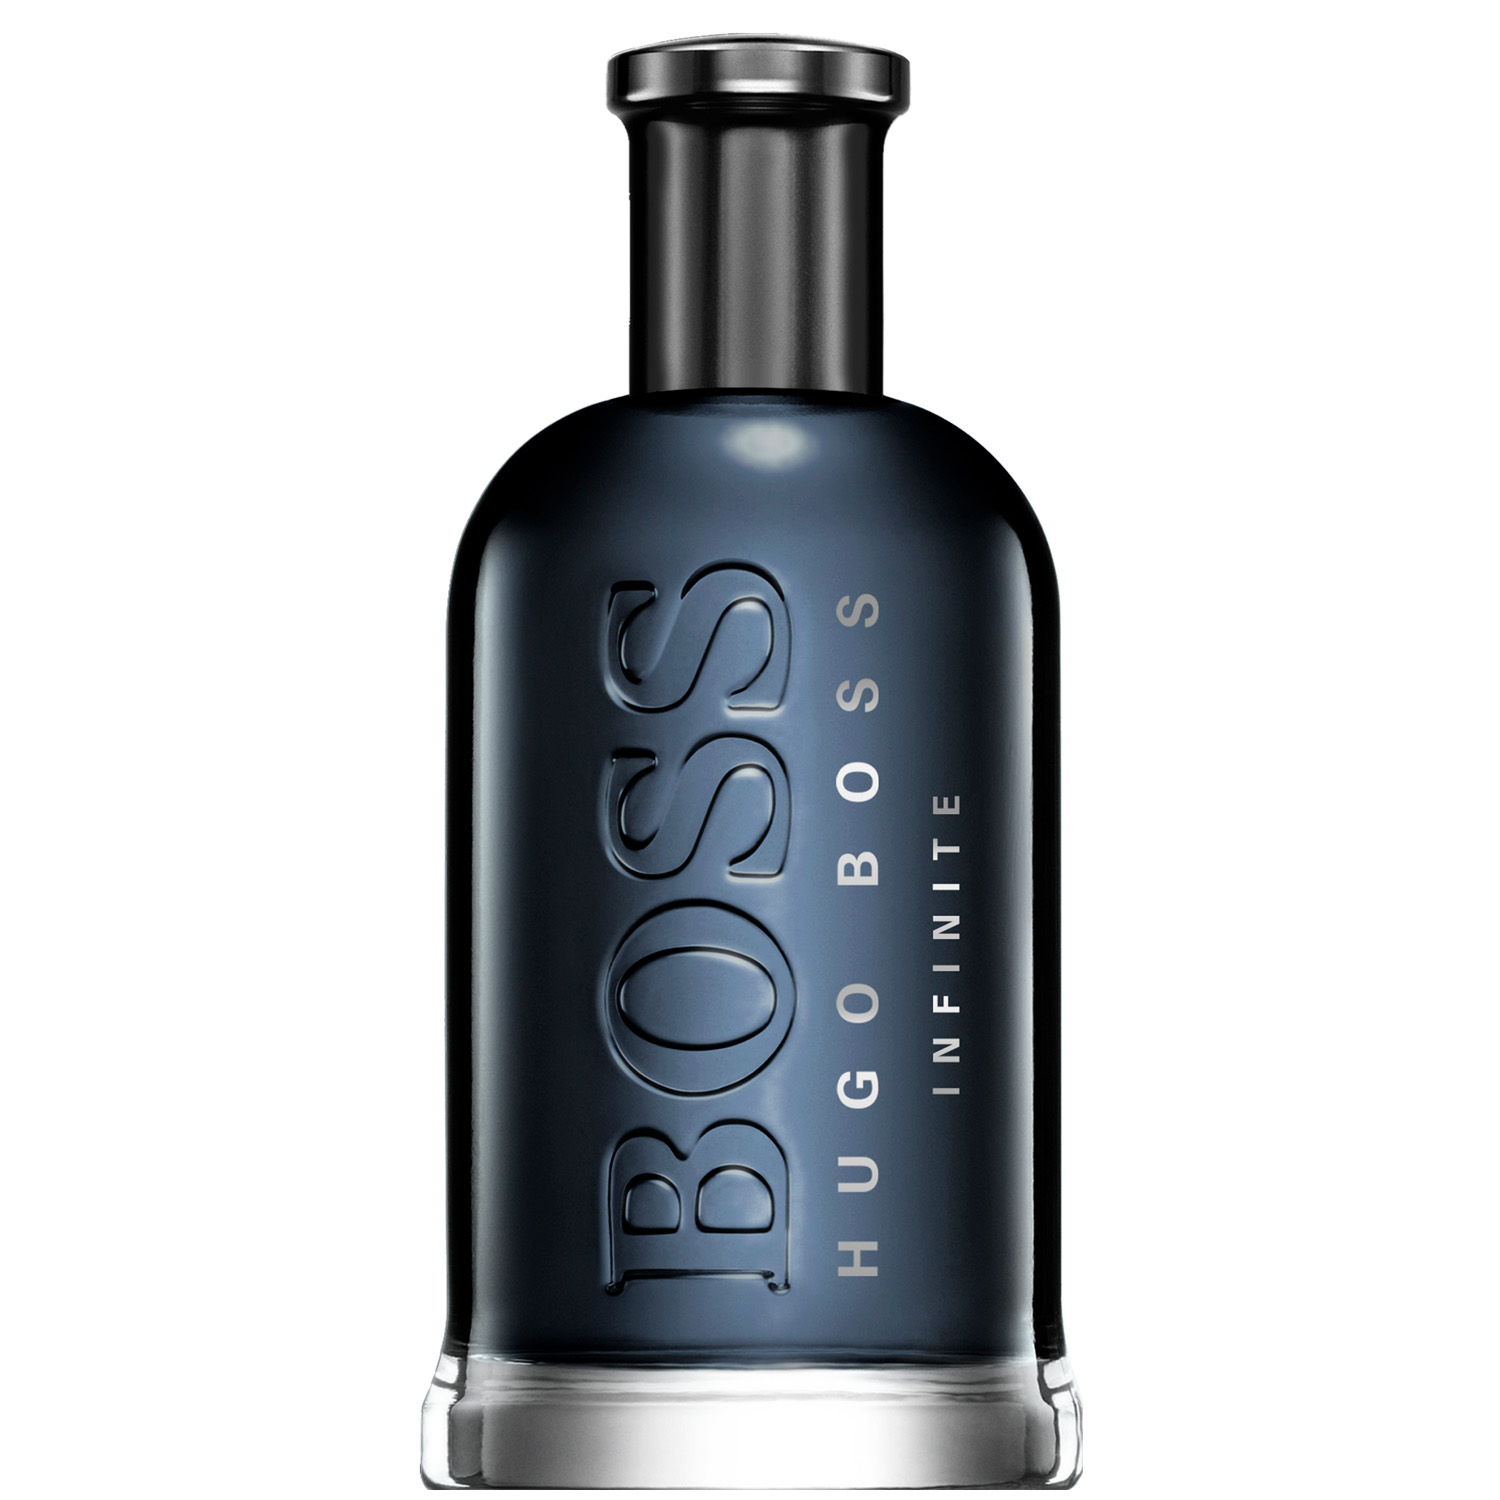 Hugo Boss Bottled Infinite Eau de Parfum 200ml